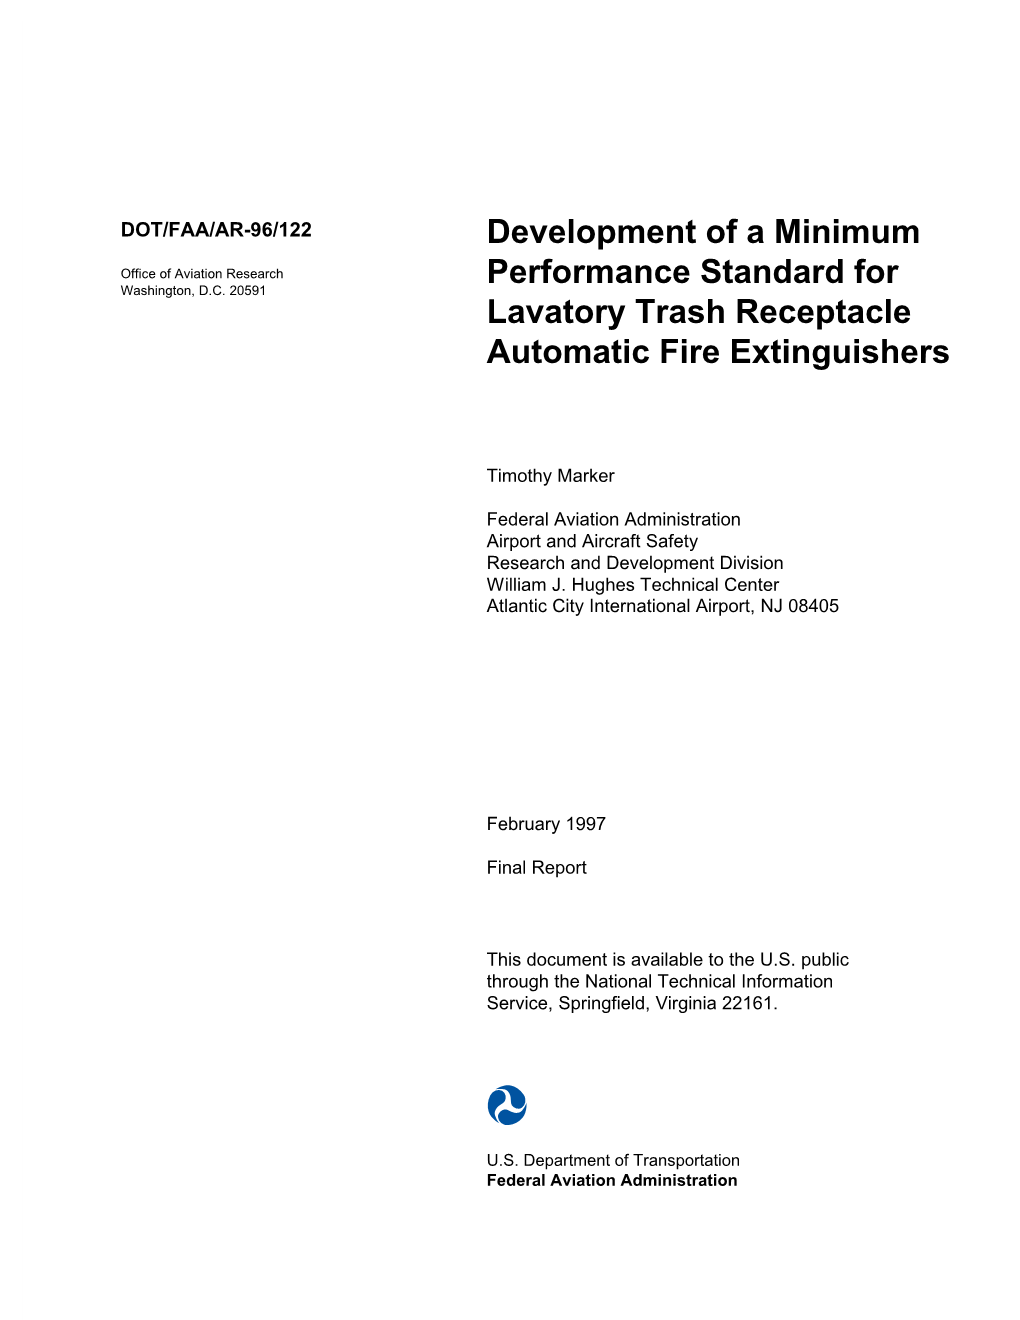 Development of a Minimum Performance Standard for Lavatory Trash Receptacle Automatic Fire Extinguishers